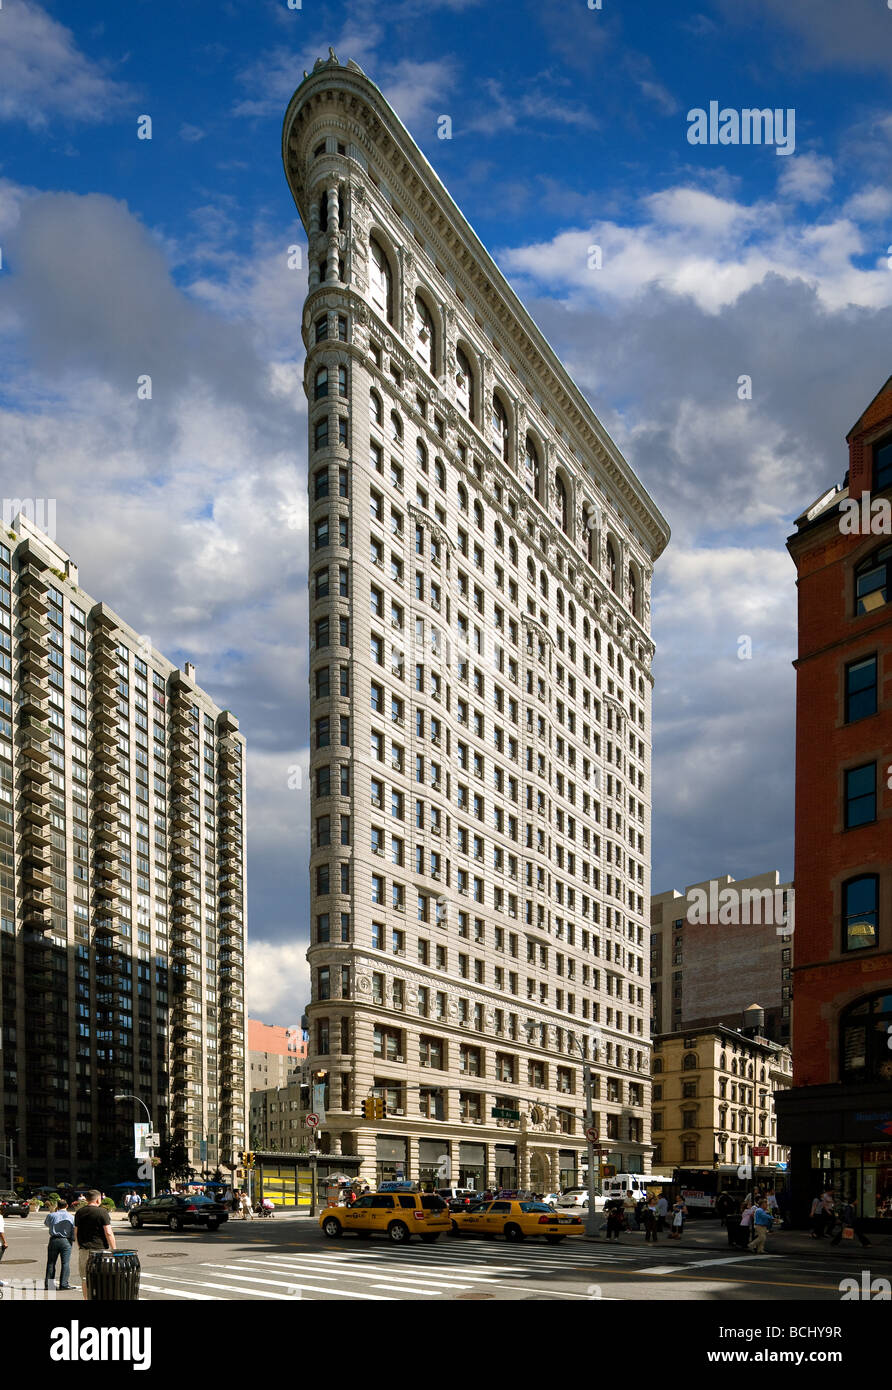 The Flatiron Building, New York City, NY Stock Photo: 24980867 - Alamy